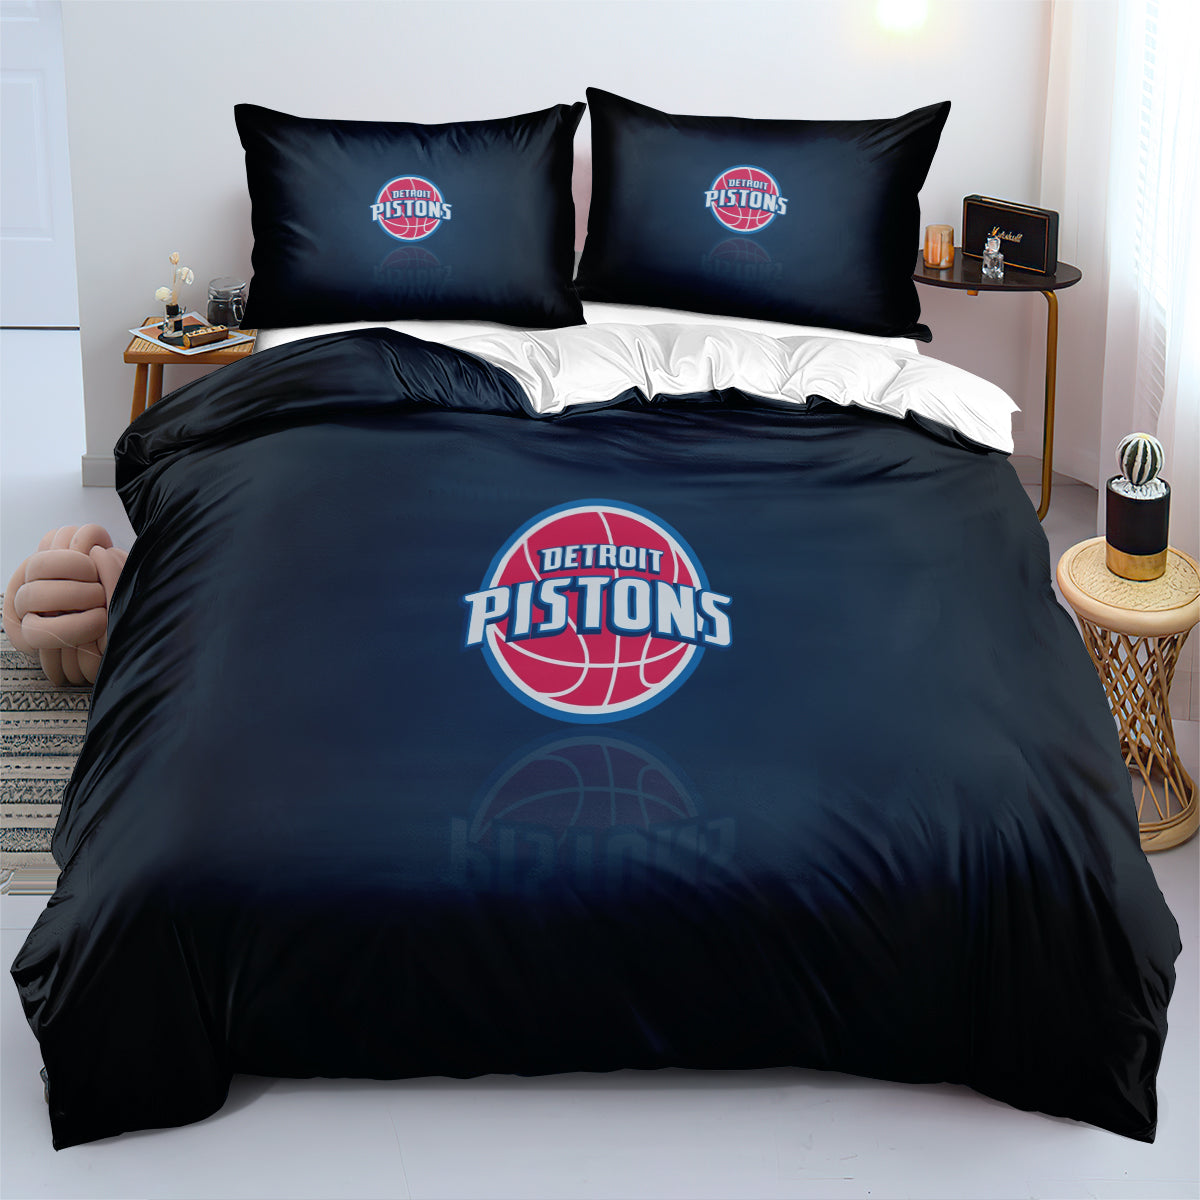 Detroit Pistons Bedding Set Quilt Cover Without Filler